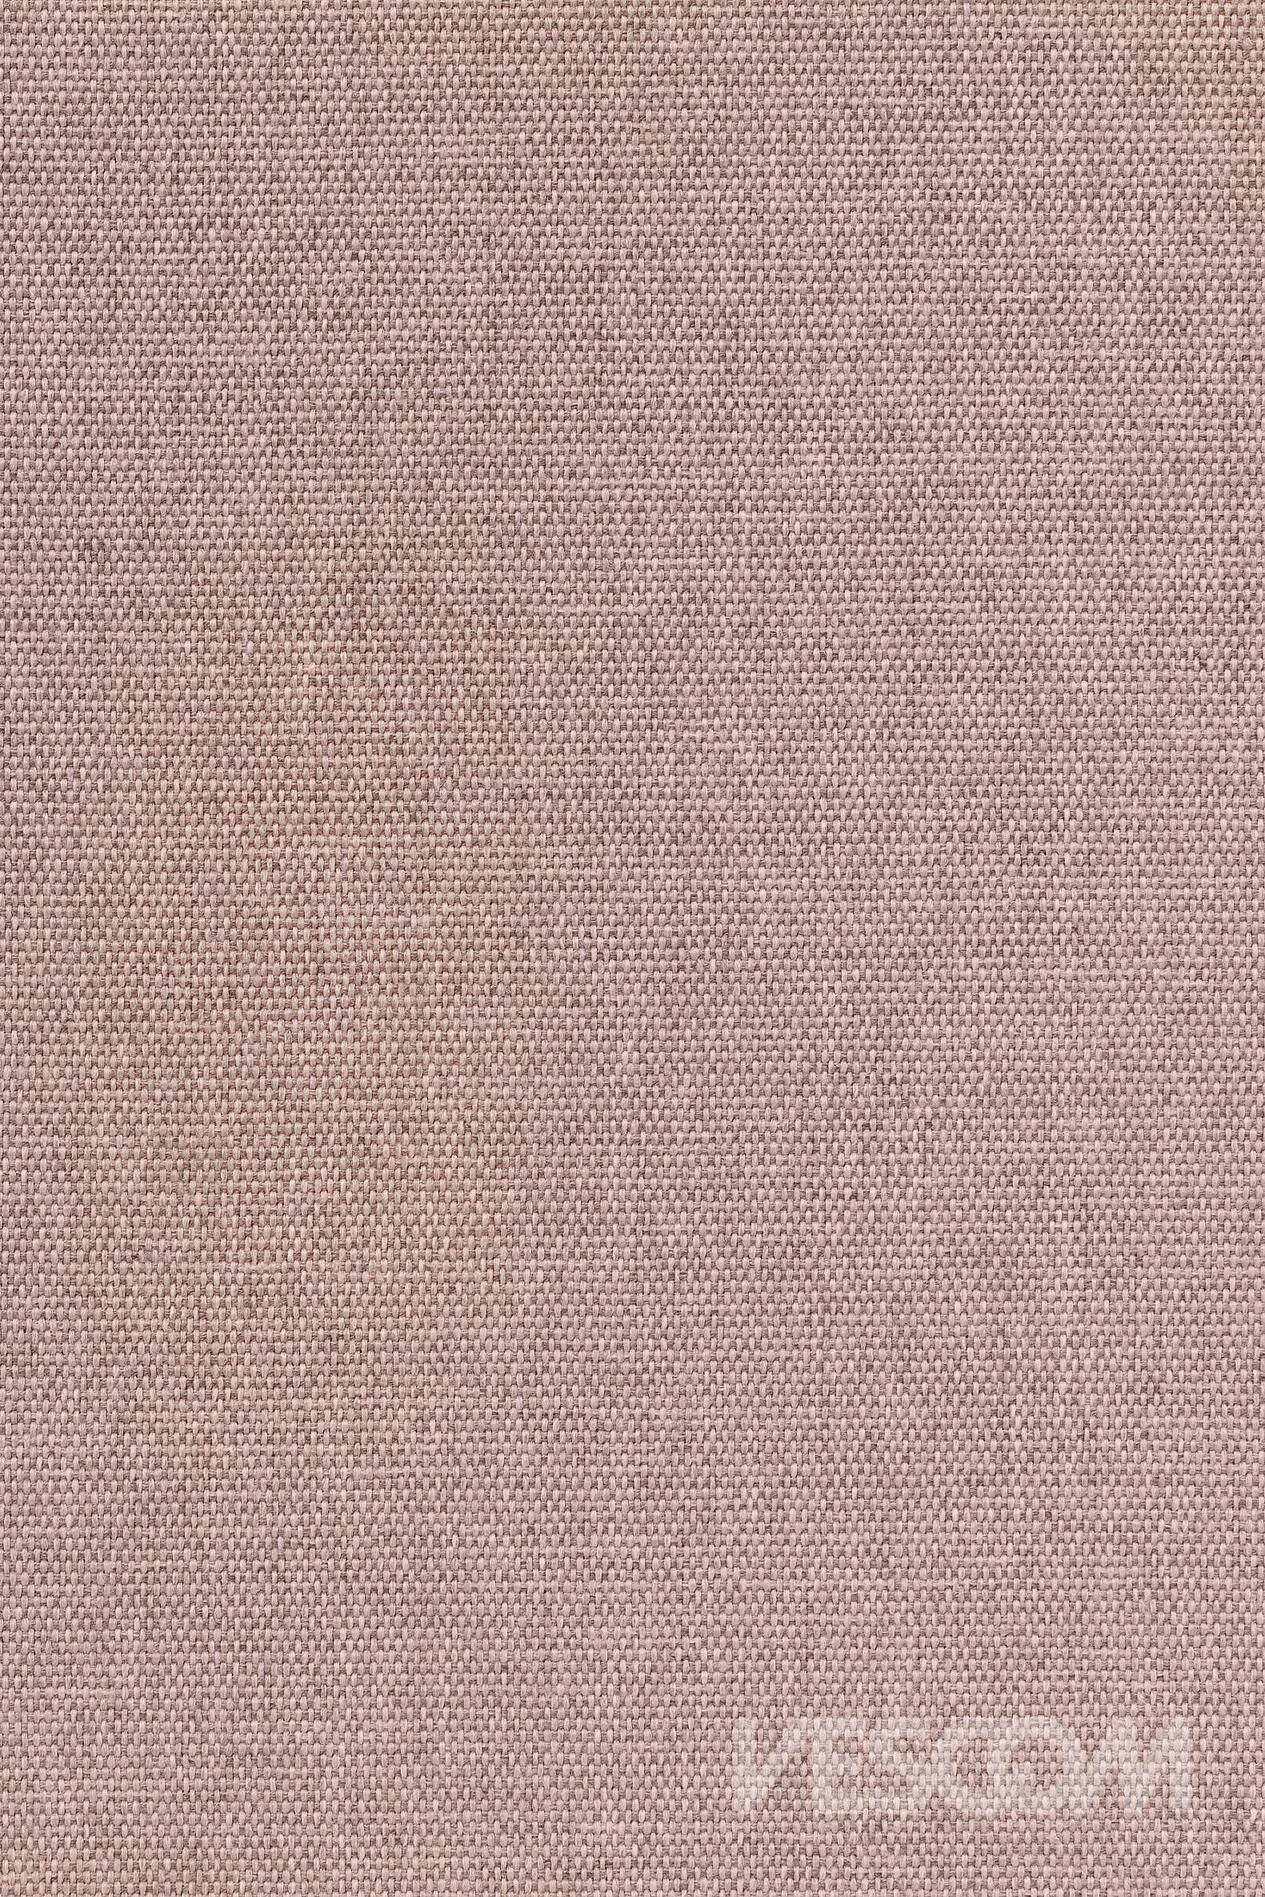 vescom-tula-curtain-fabric-8081-07